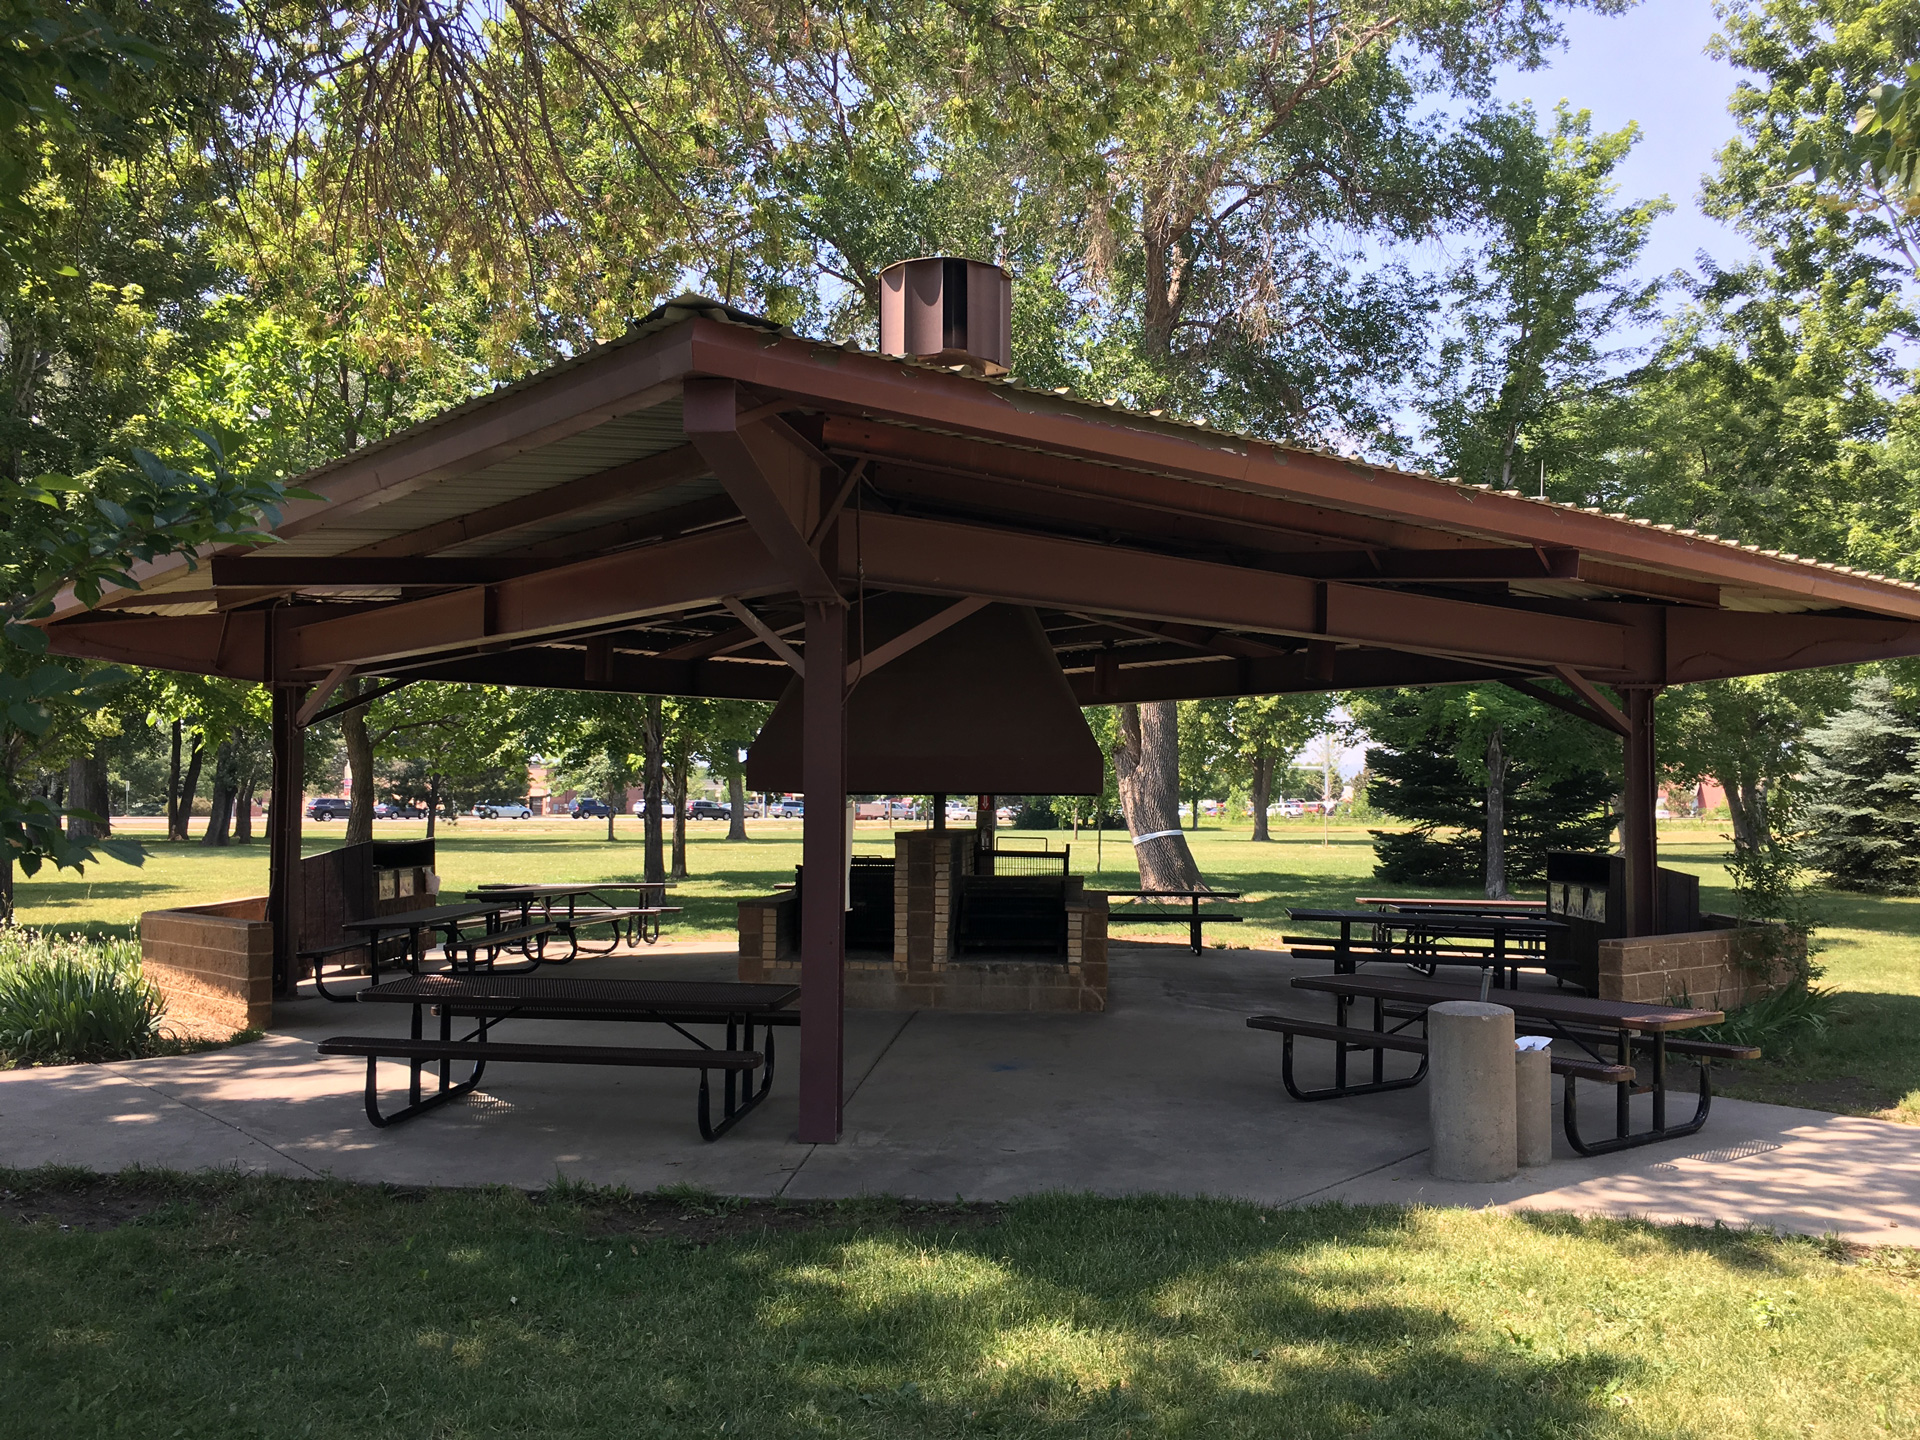 Fairgrounds picnic shelter